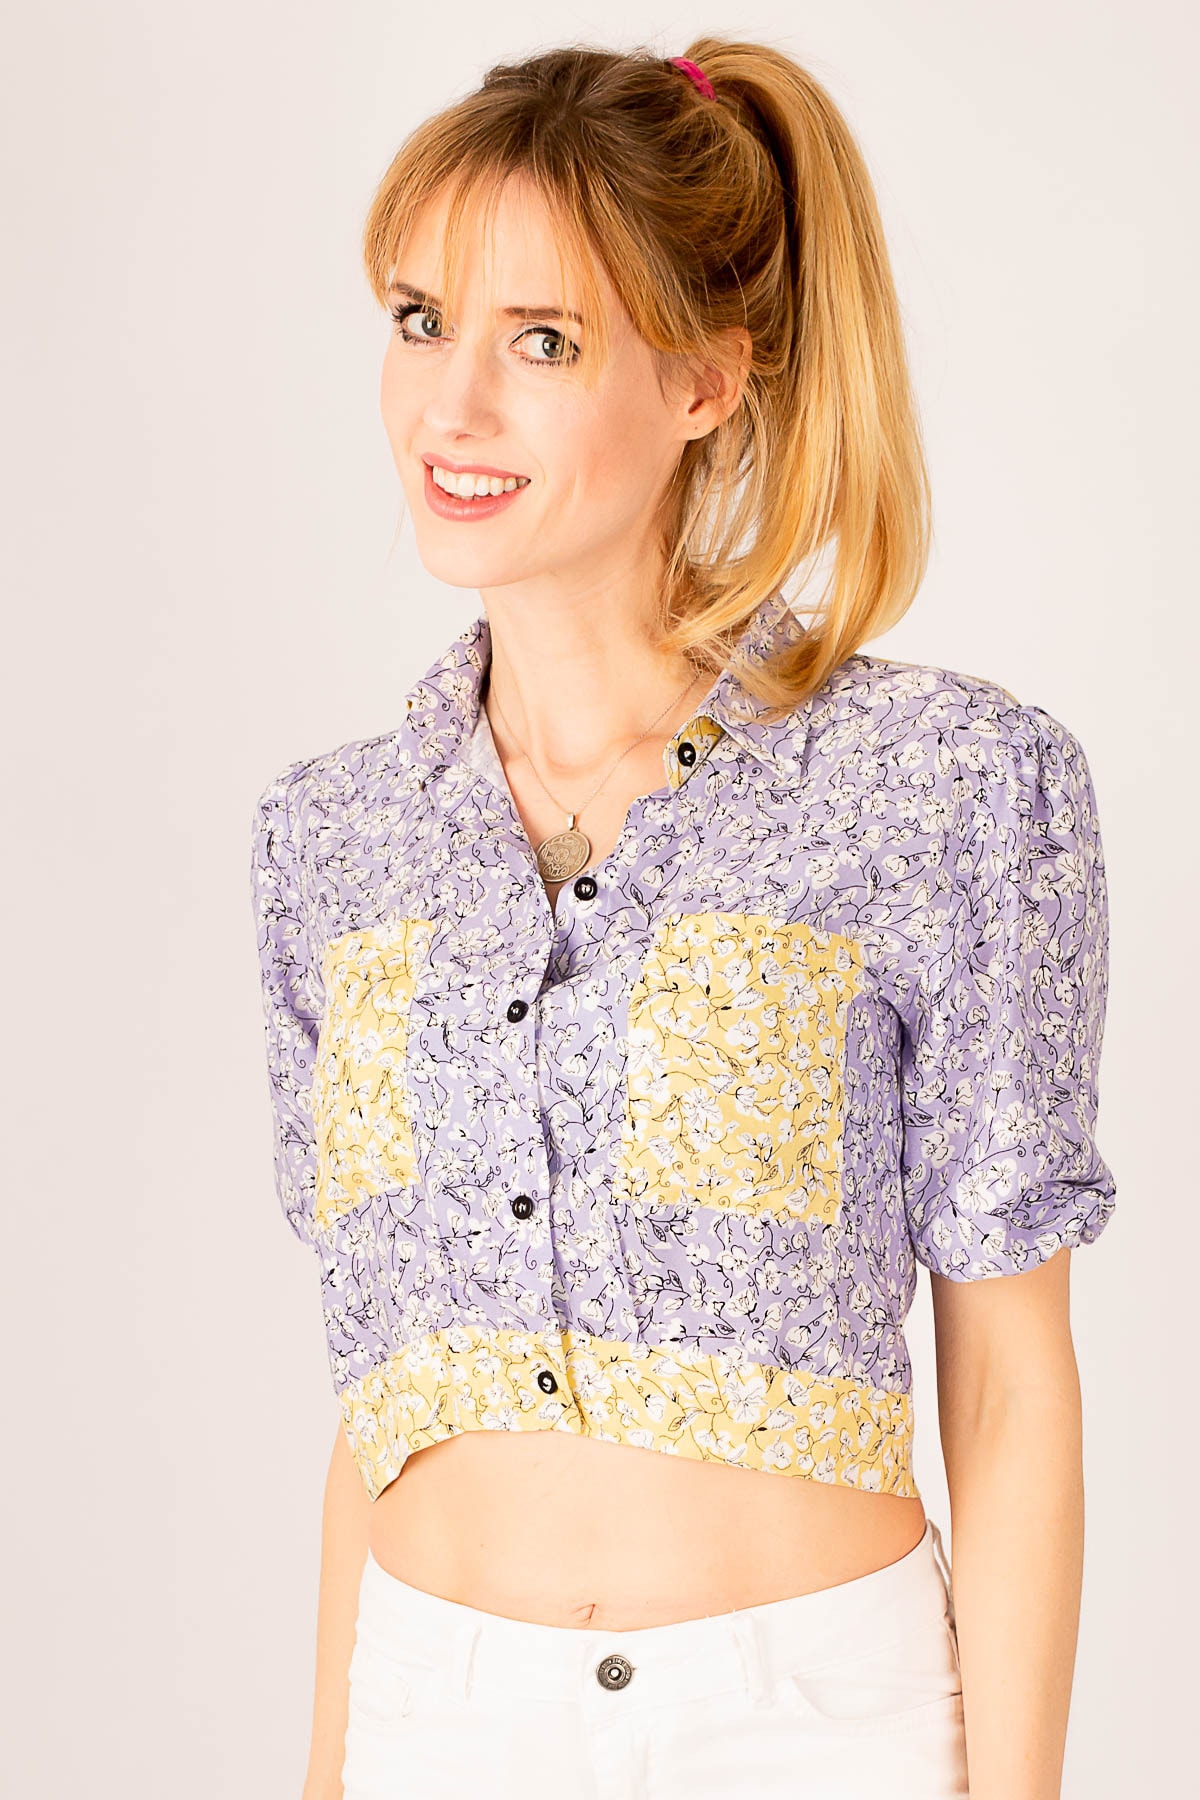 armonika Women's Lilac Crop Shirt with Elastic Sleeves, Pocket, Back Detail